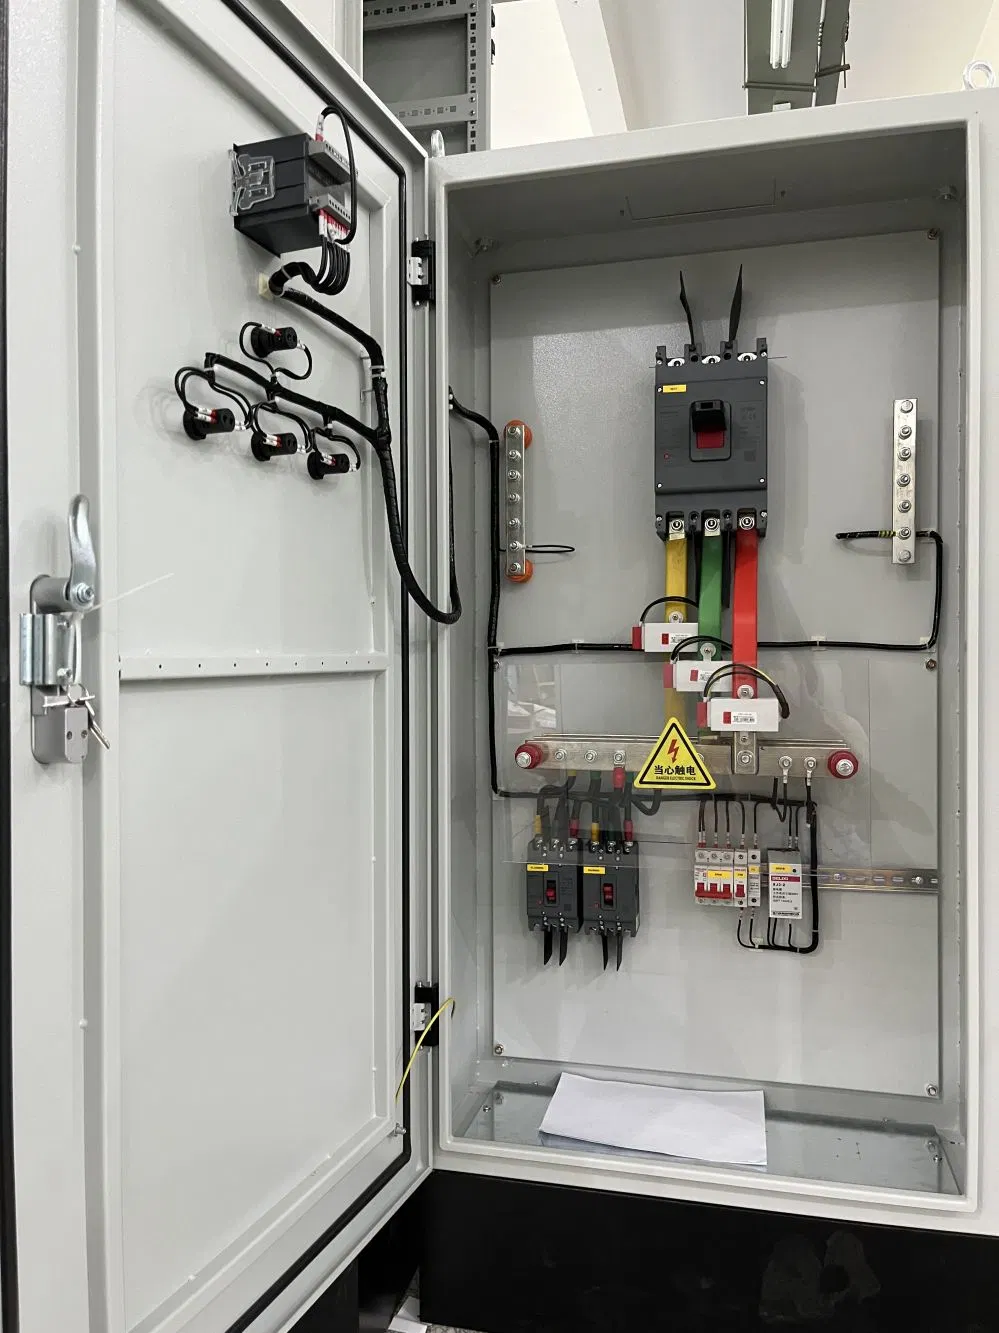 Q86 MCCB Panel Board Electrical Distribution Panel